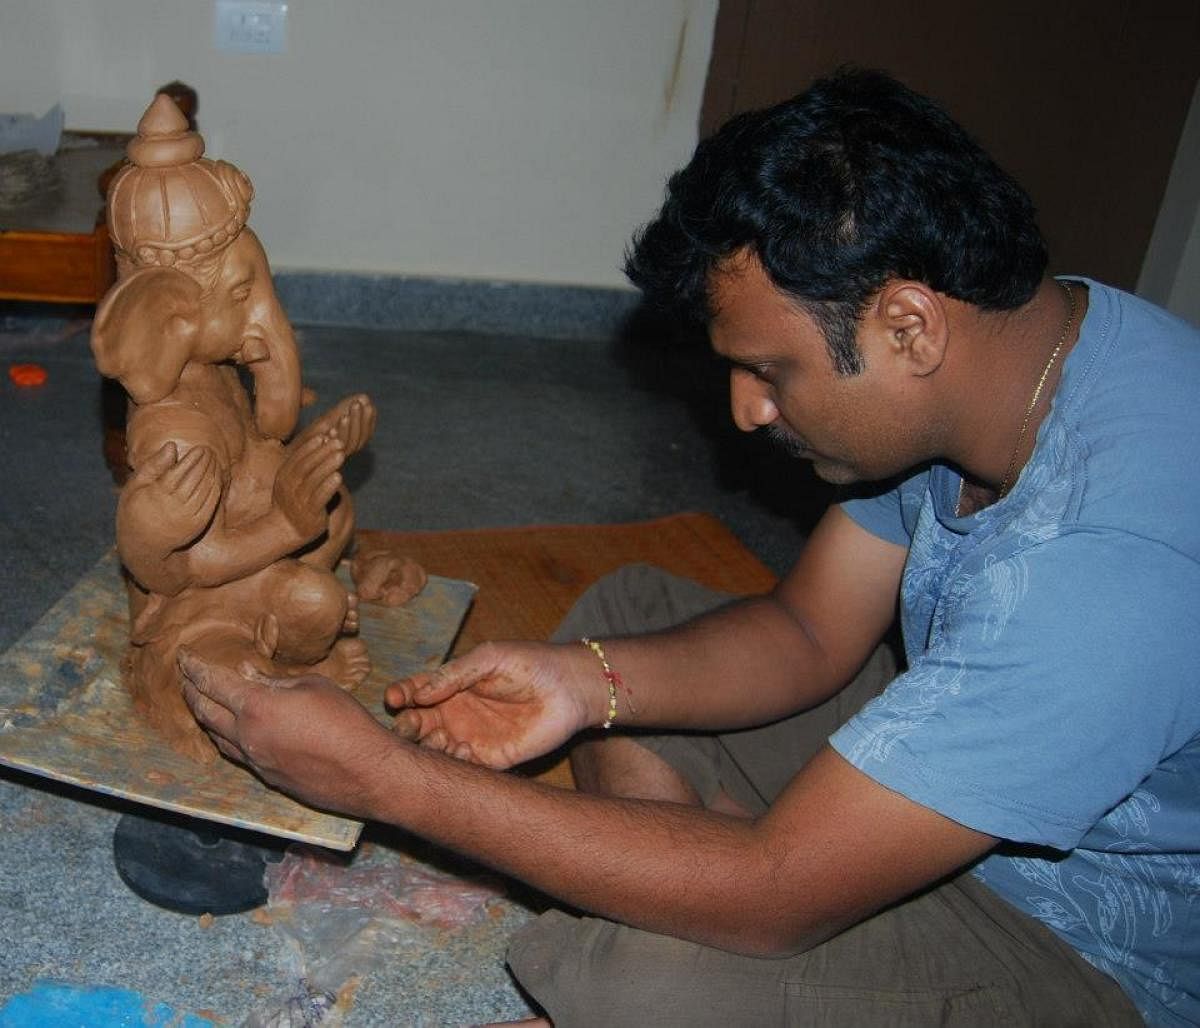 Chandrashekar G M working on a clay Ganesha sculpture.